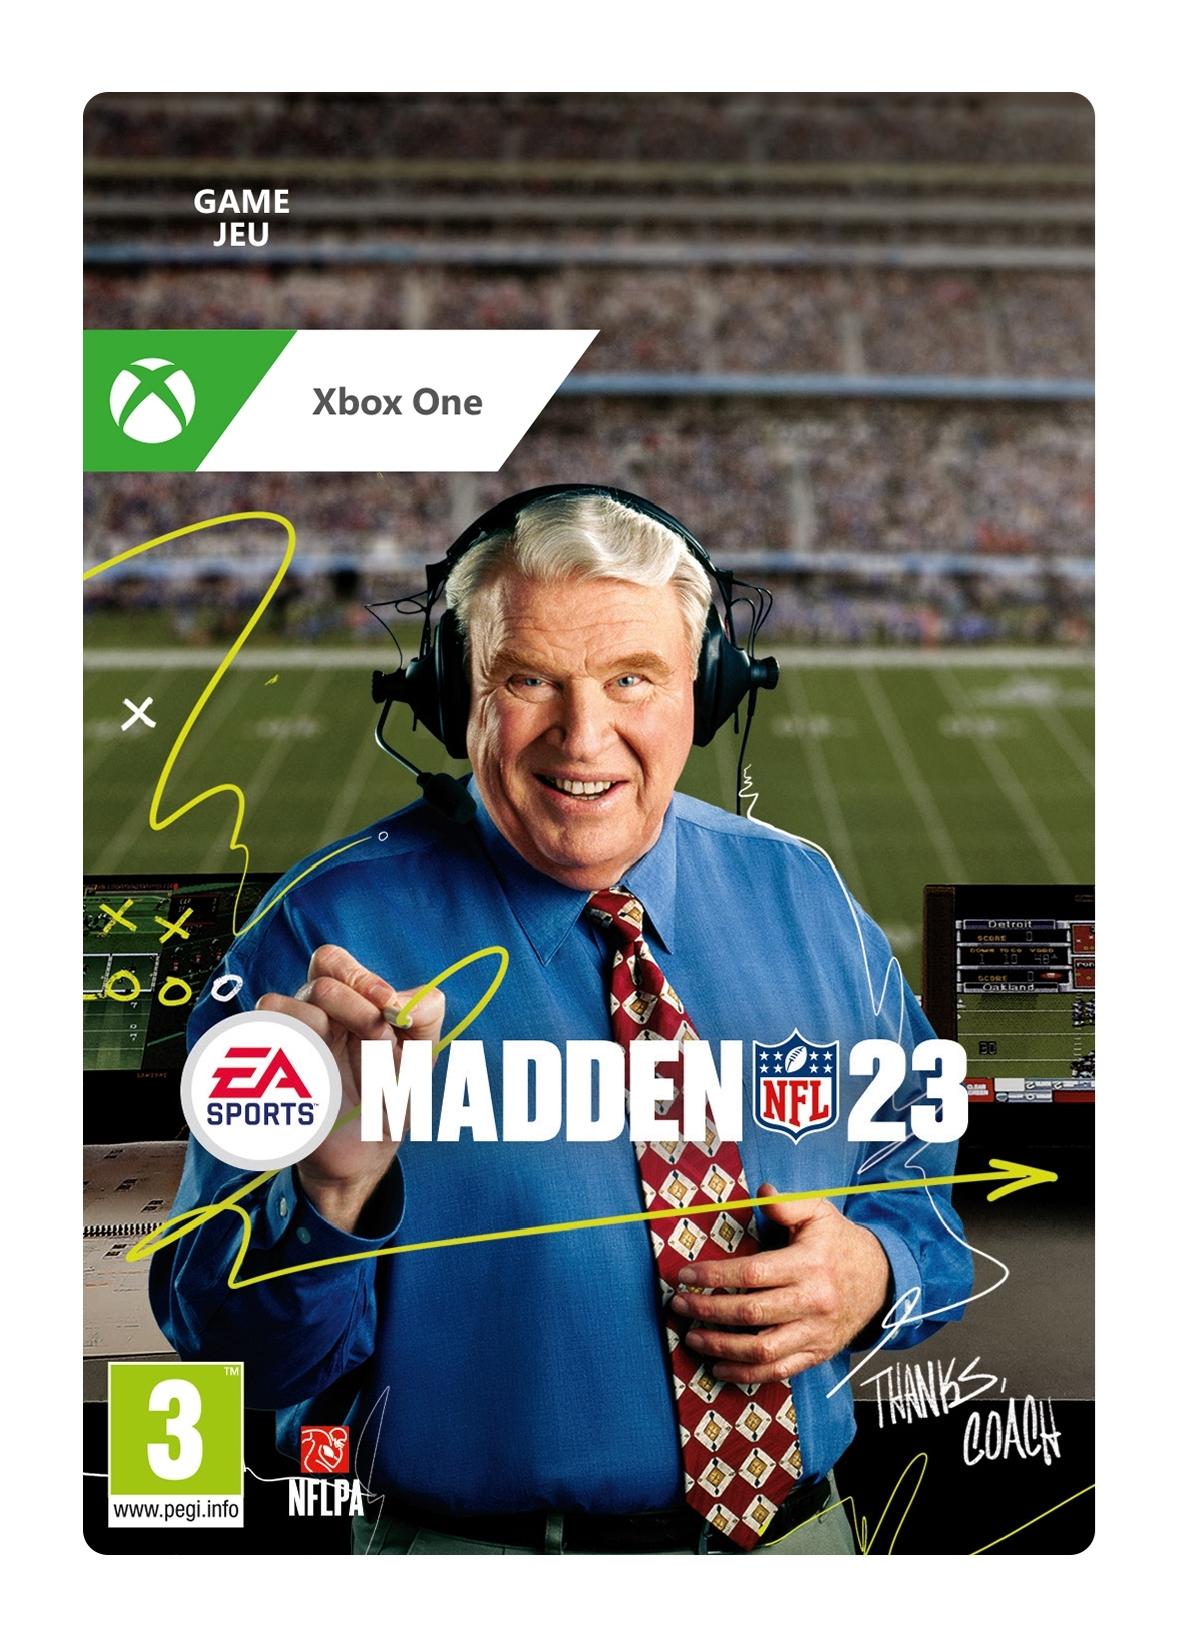 MADDEN NFL 23: STANDARD EDITION - Xbox One - Game | G3Q-01377 (c705a3b0-686f-364e-84c0-6a8255dc70c4)